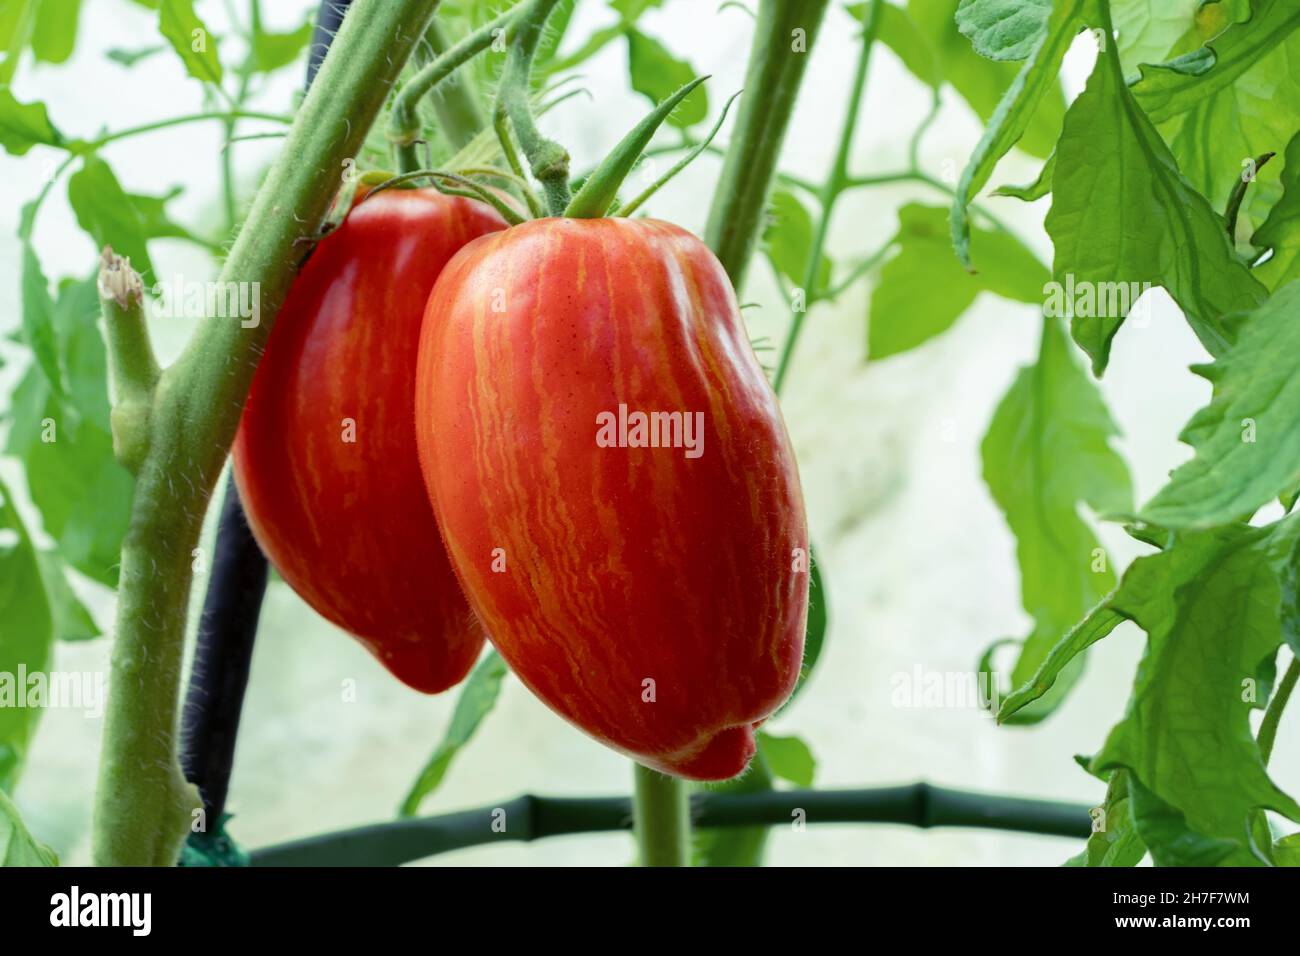 https://c8.alamy.com/comp/2H7F7WM/ripe-elongated-striped-tomatoes-on-a-bush-in-a-greenhouse-2H7F7WM.jpg